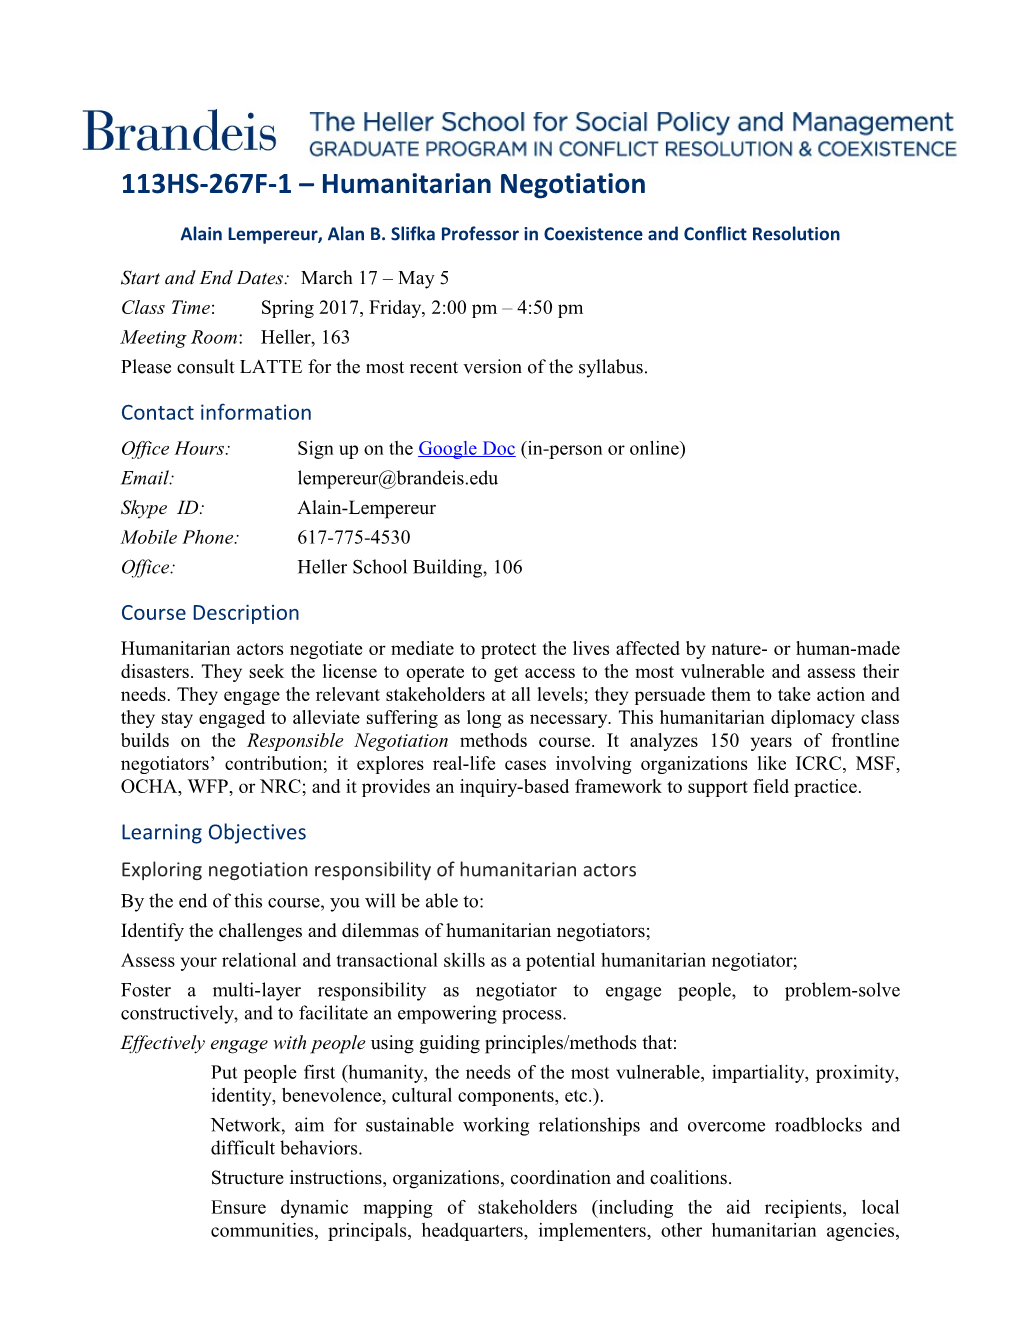 Humanitarian Negotiation (2017) Alain Lempereur, Alan B. Slifka Chair Professor1